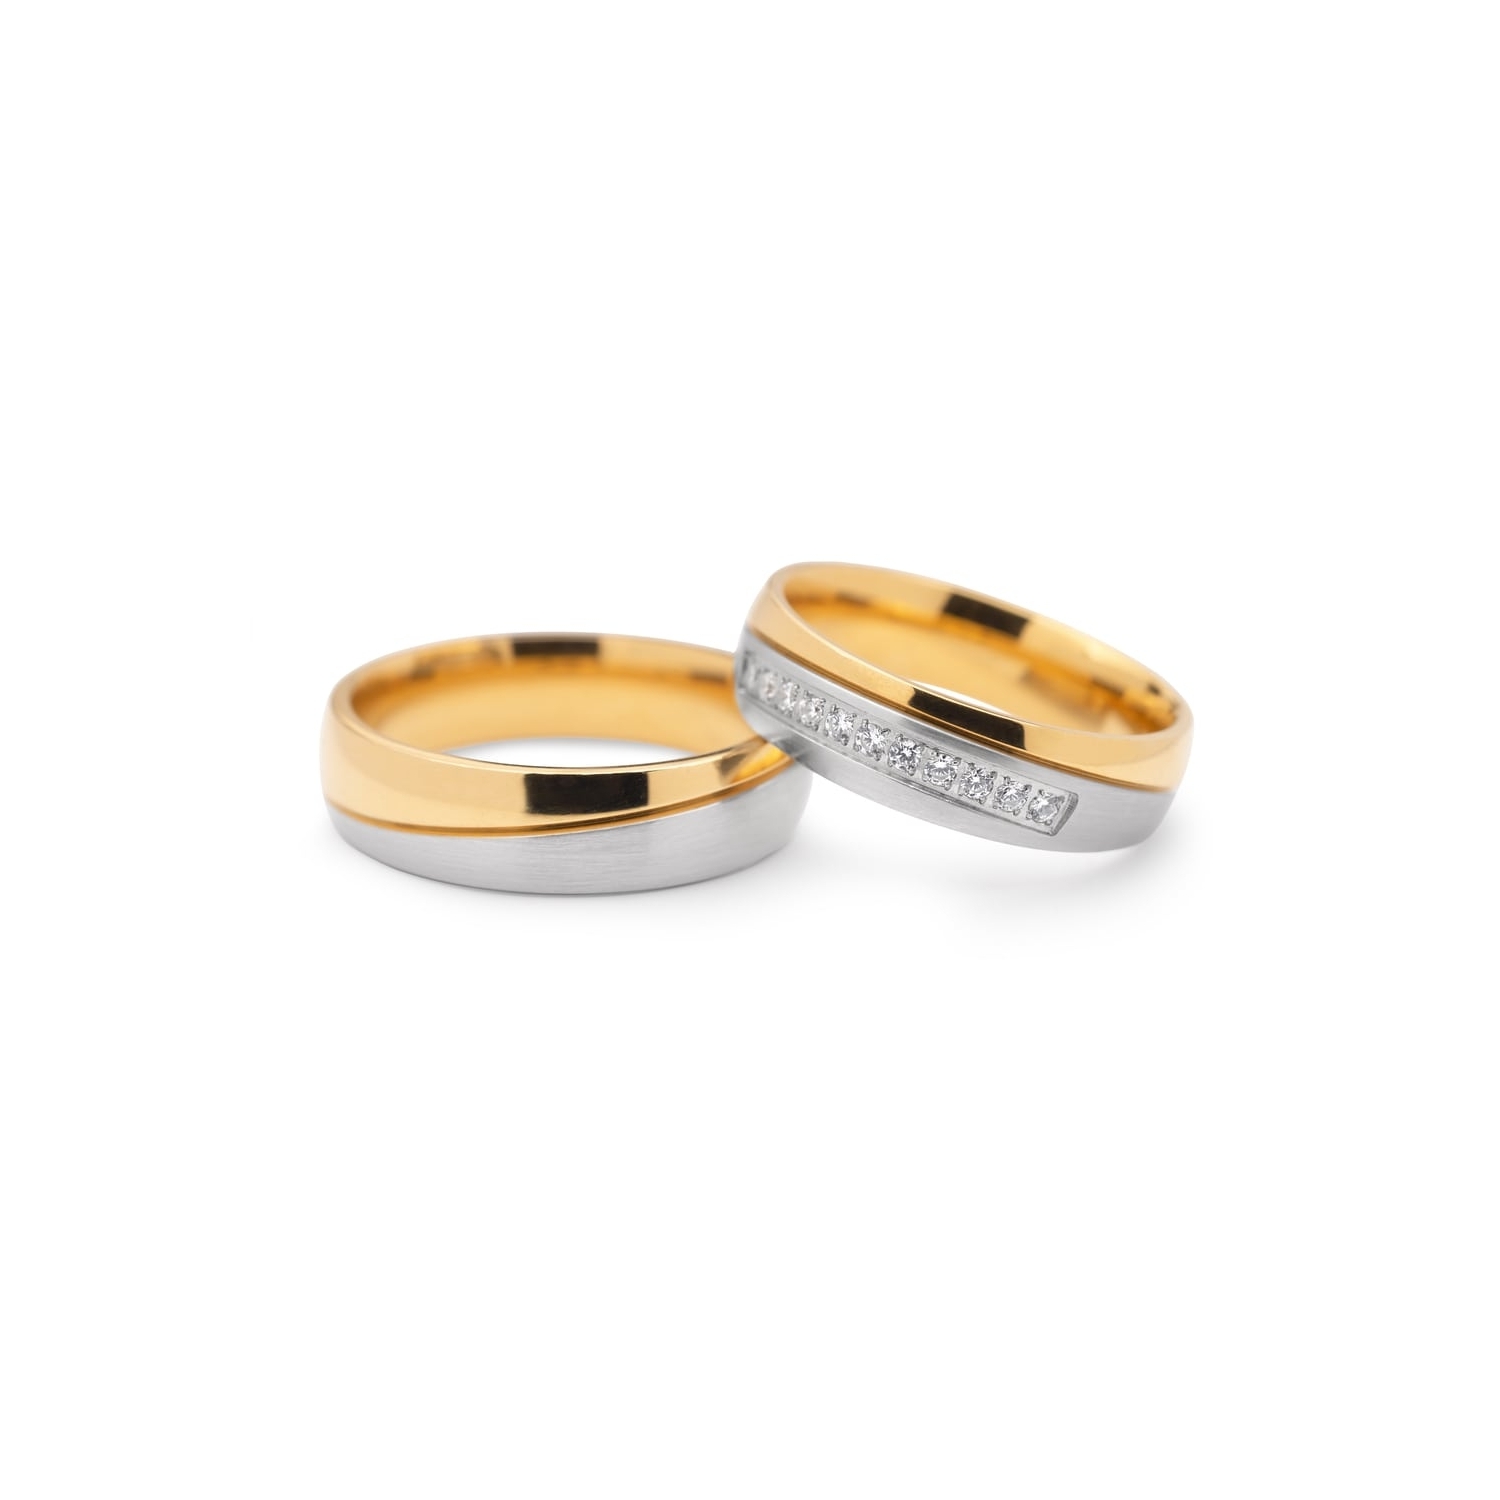 Golden wedding rings with diamonds "VKA 110"